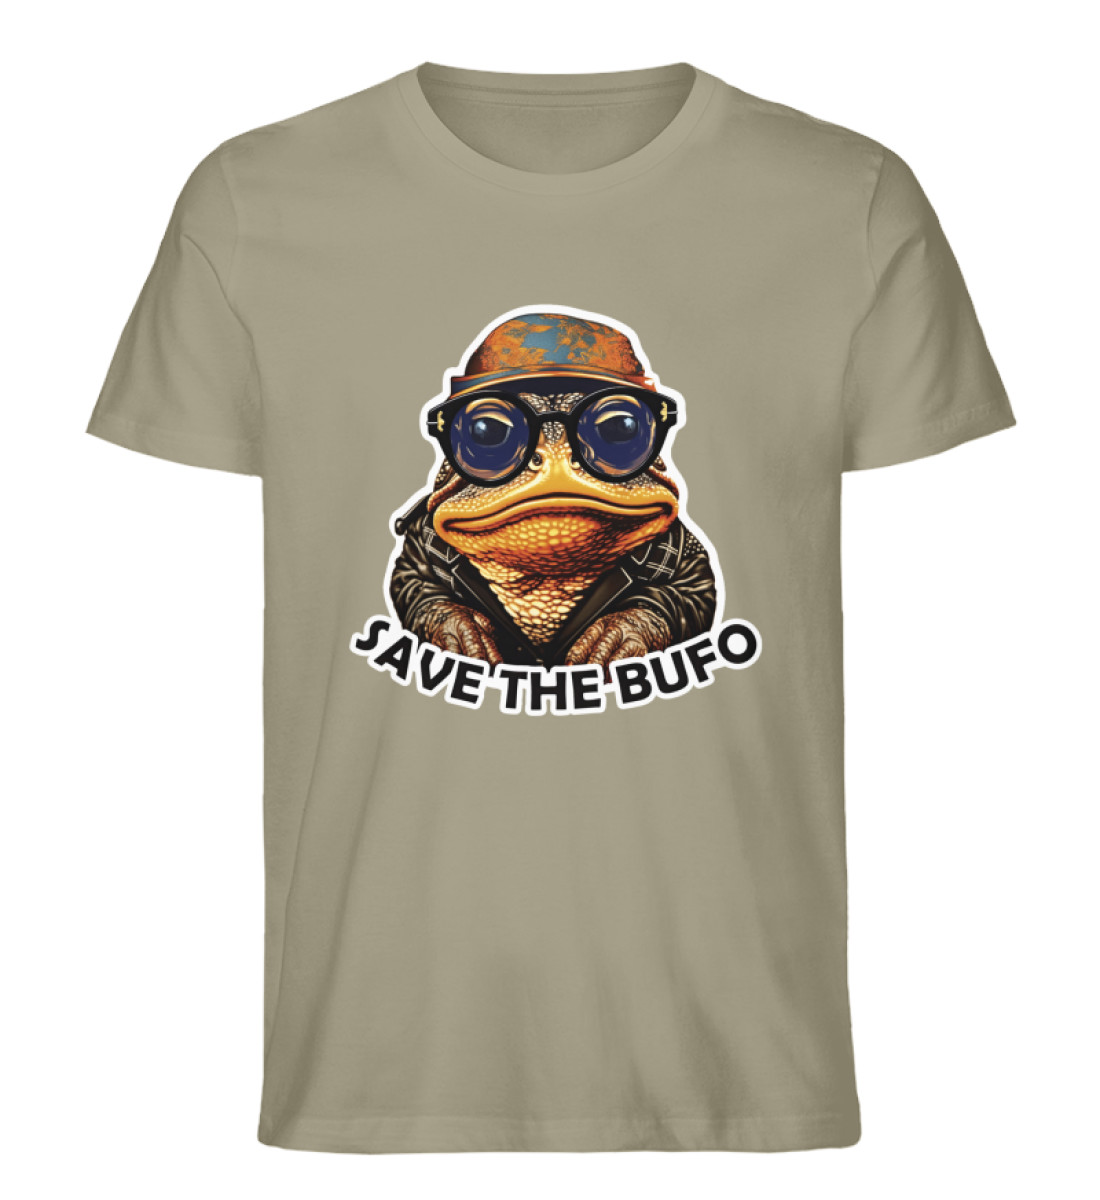 Save The Bufo! 5-MeO-DMT - Premium Organic T-Shirt - Men Premium Organic Shirt-651